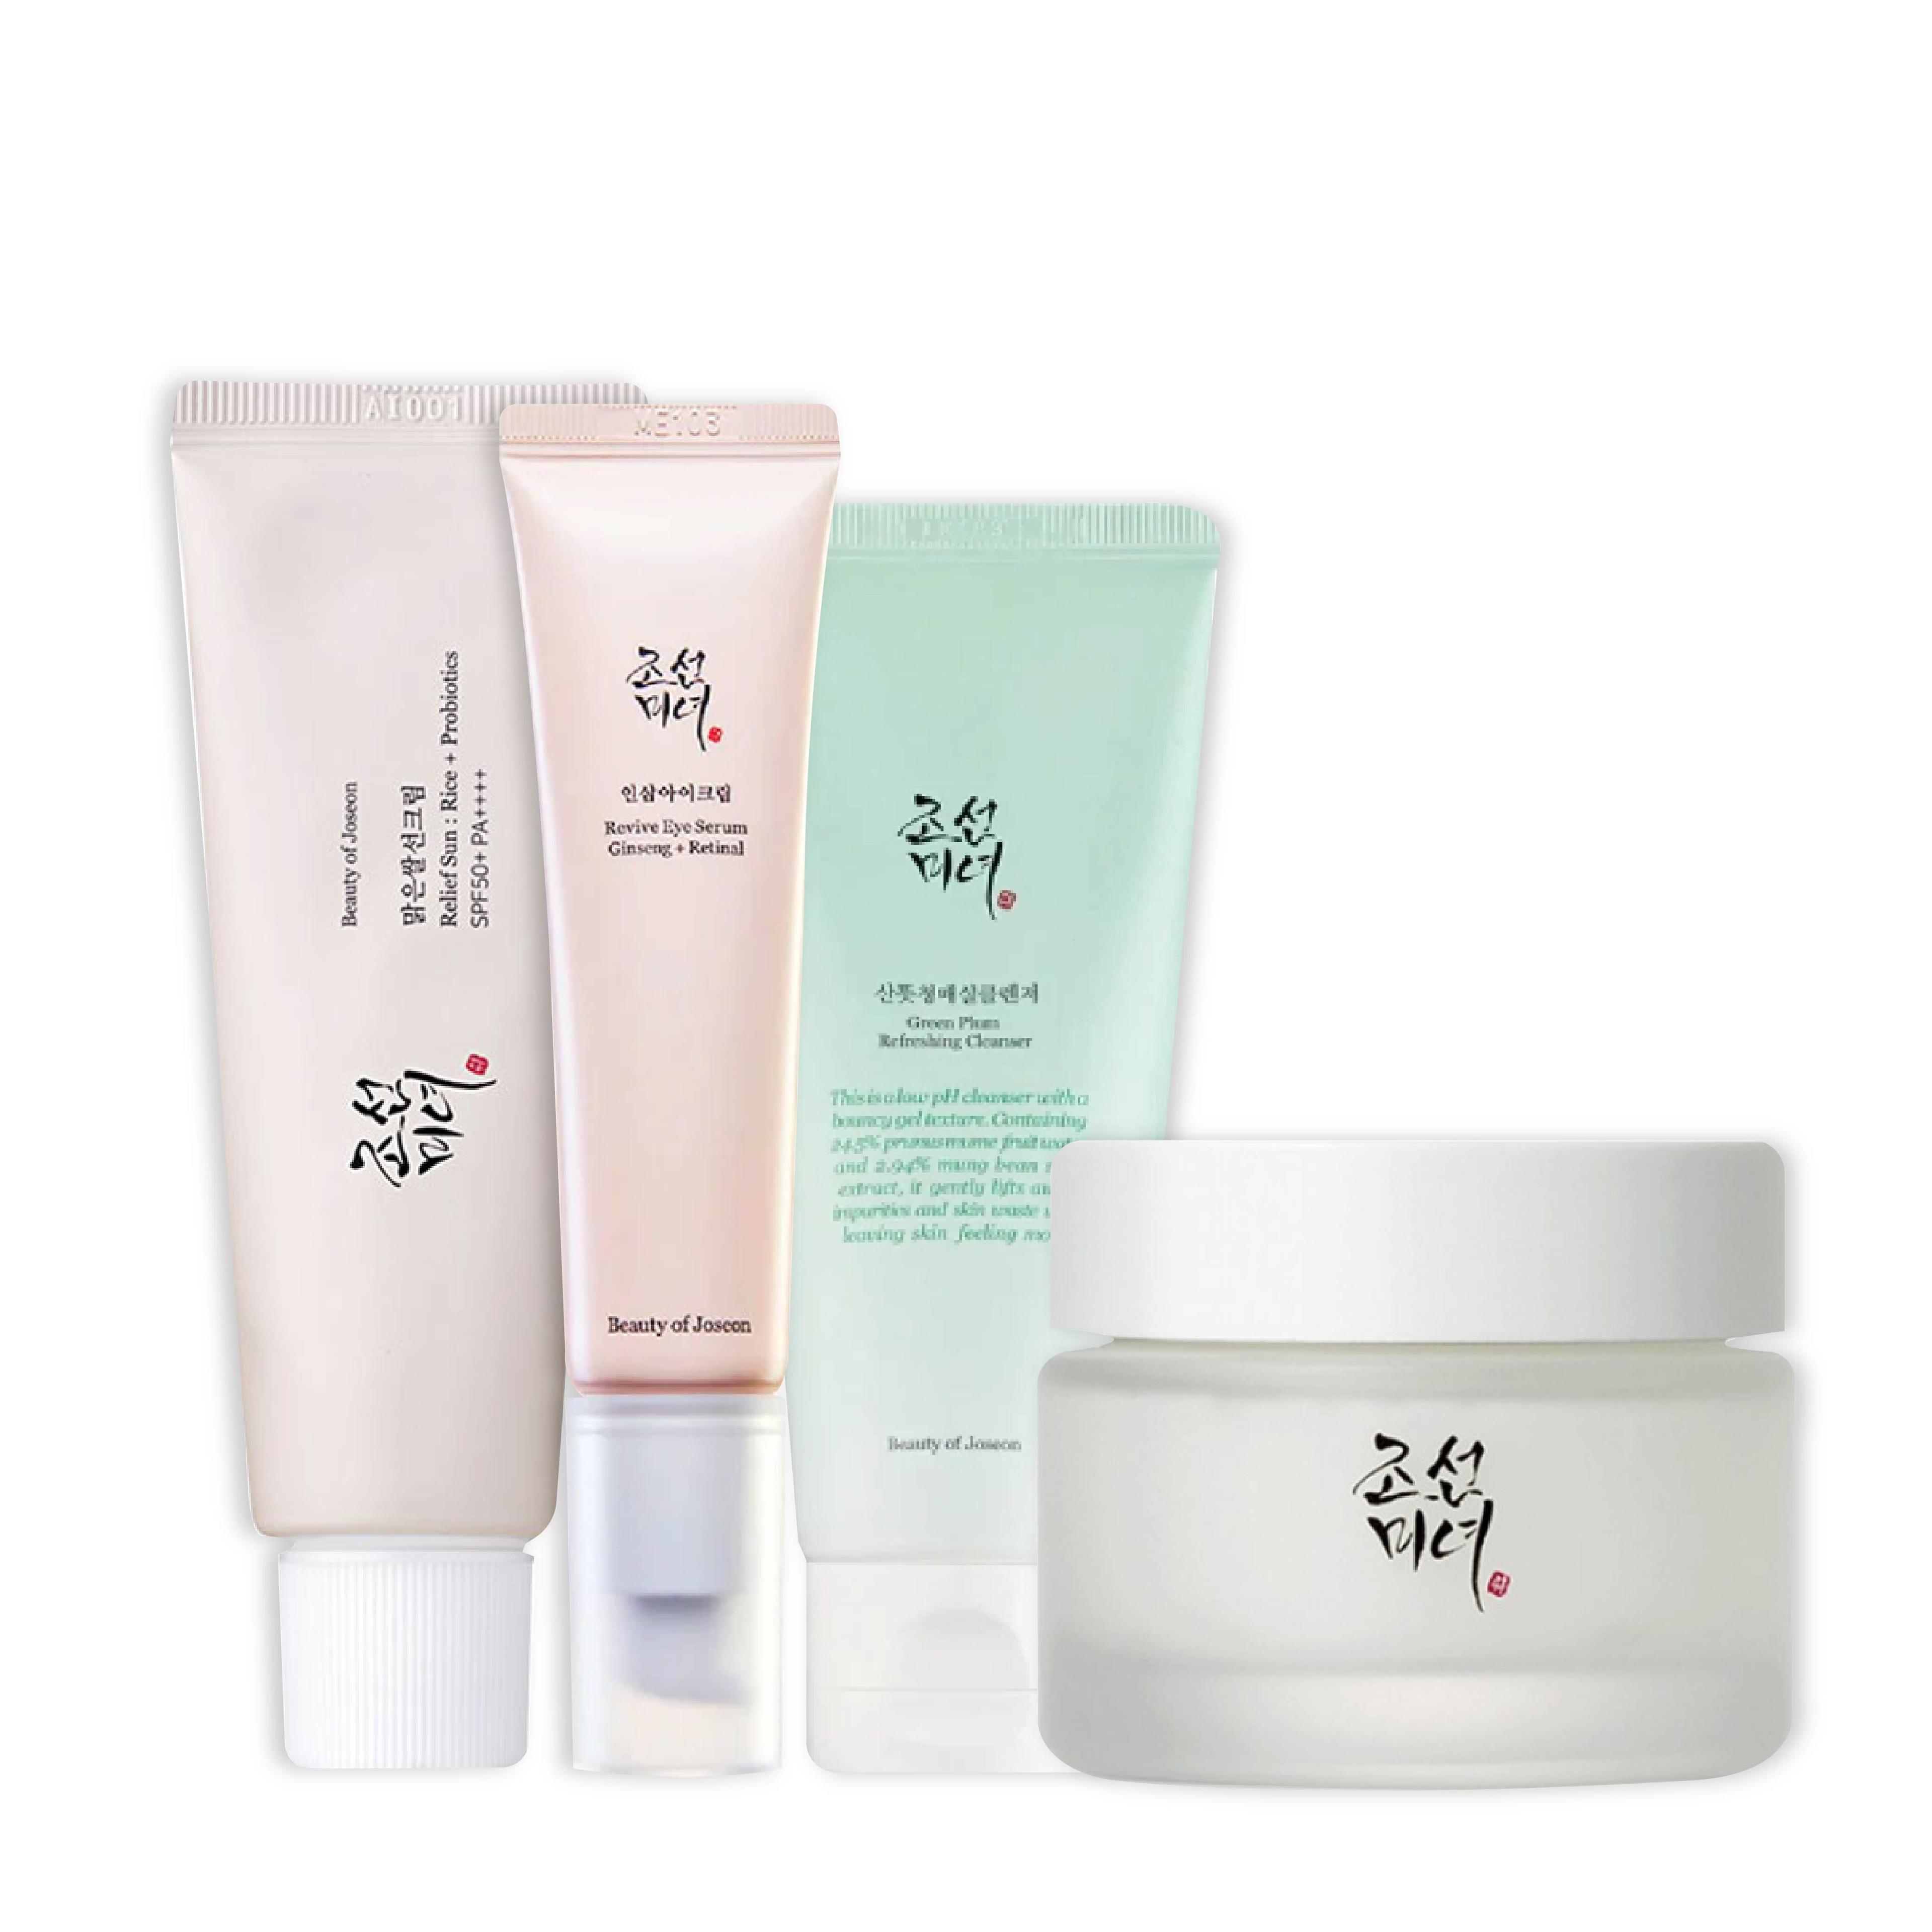 Beauty of Joseon 4 pcs Bundle Set [Relief Sun: Rice + Probiotics SPF50+ PA++++, Revive Eye Serum: Ginseng + Retinal, Green Plum Refreshing Cleanser, Dynasty Cream]